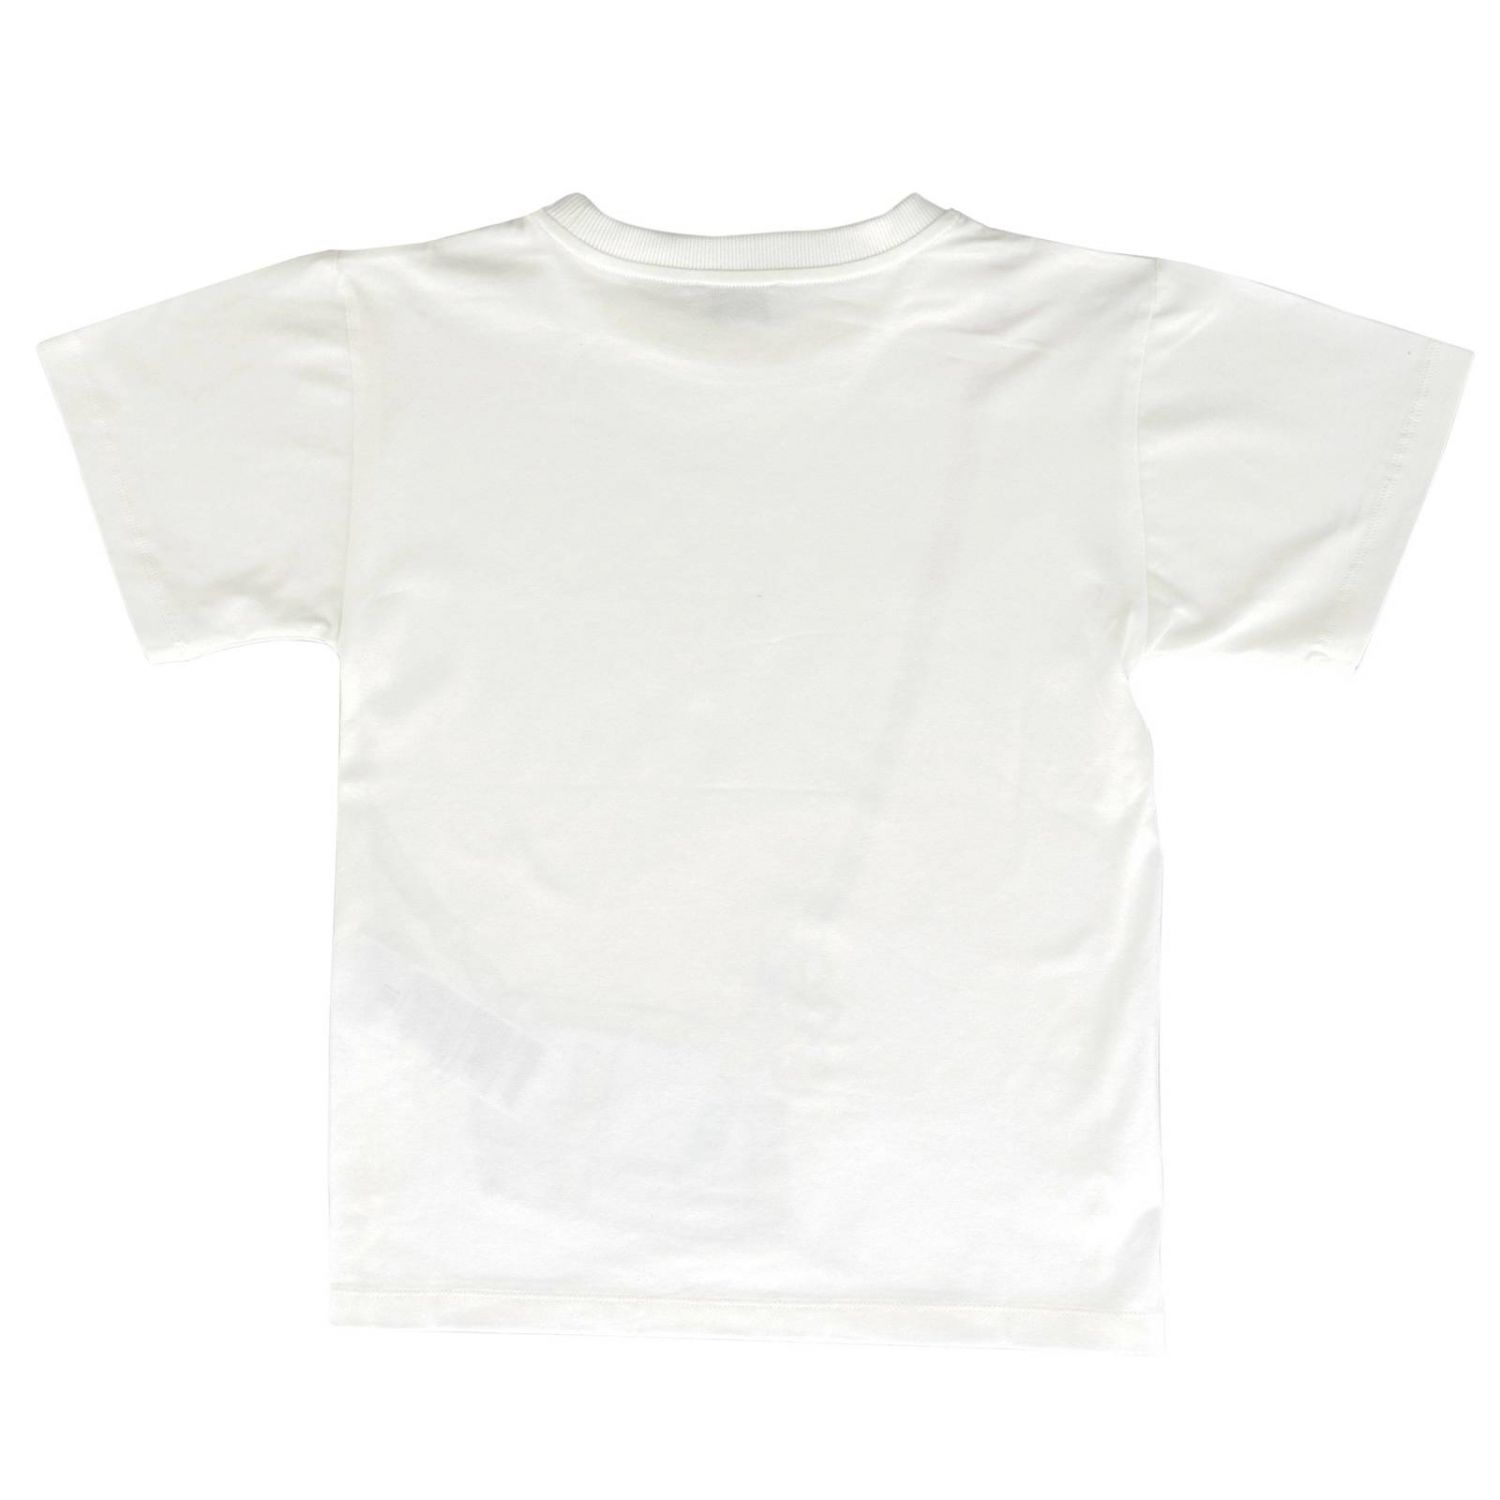 Moschino Kid Outlet: T-shirt kids | T-Shirt Moschino Kid Kids White | T ...